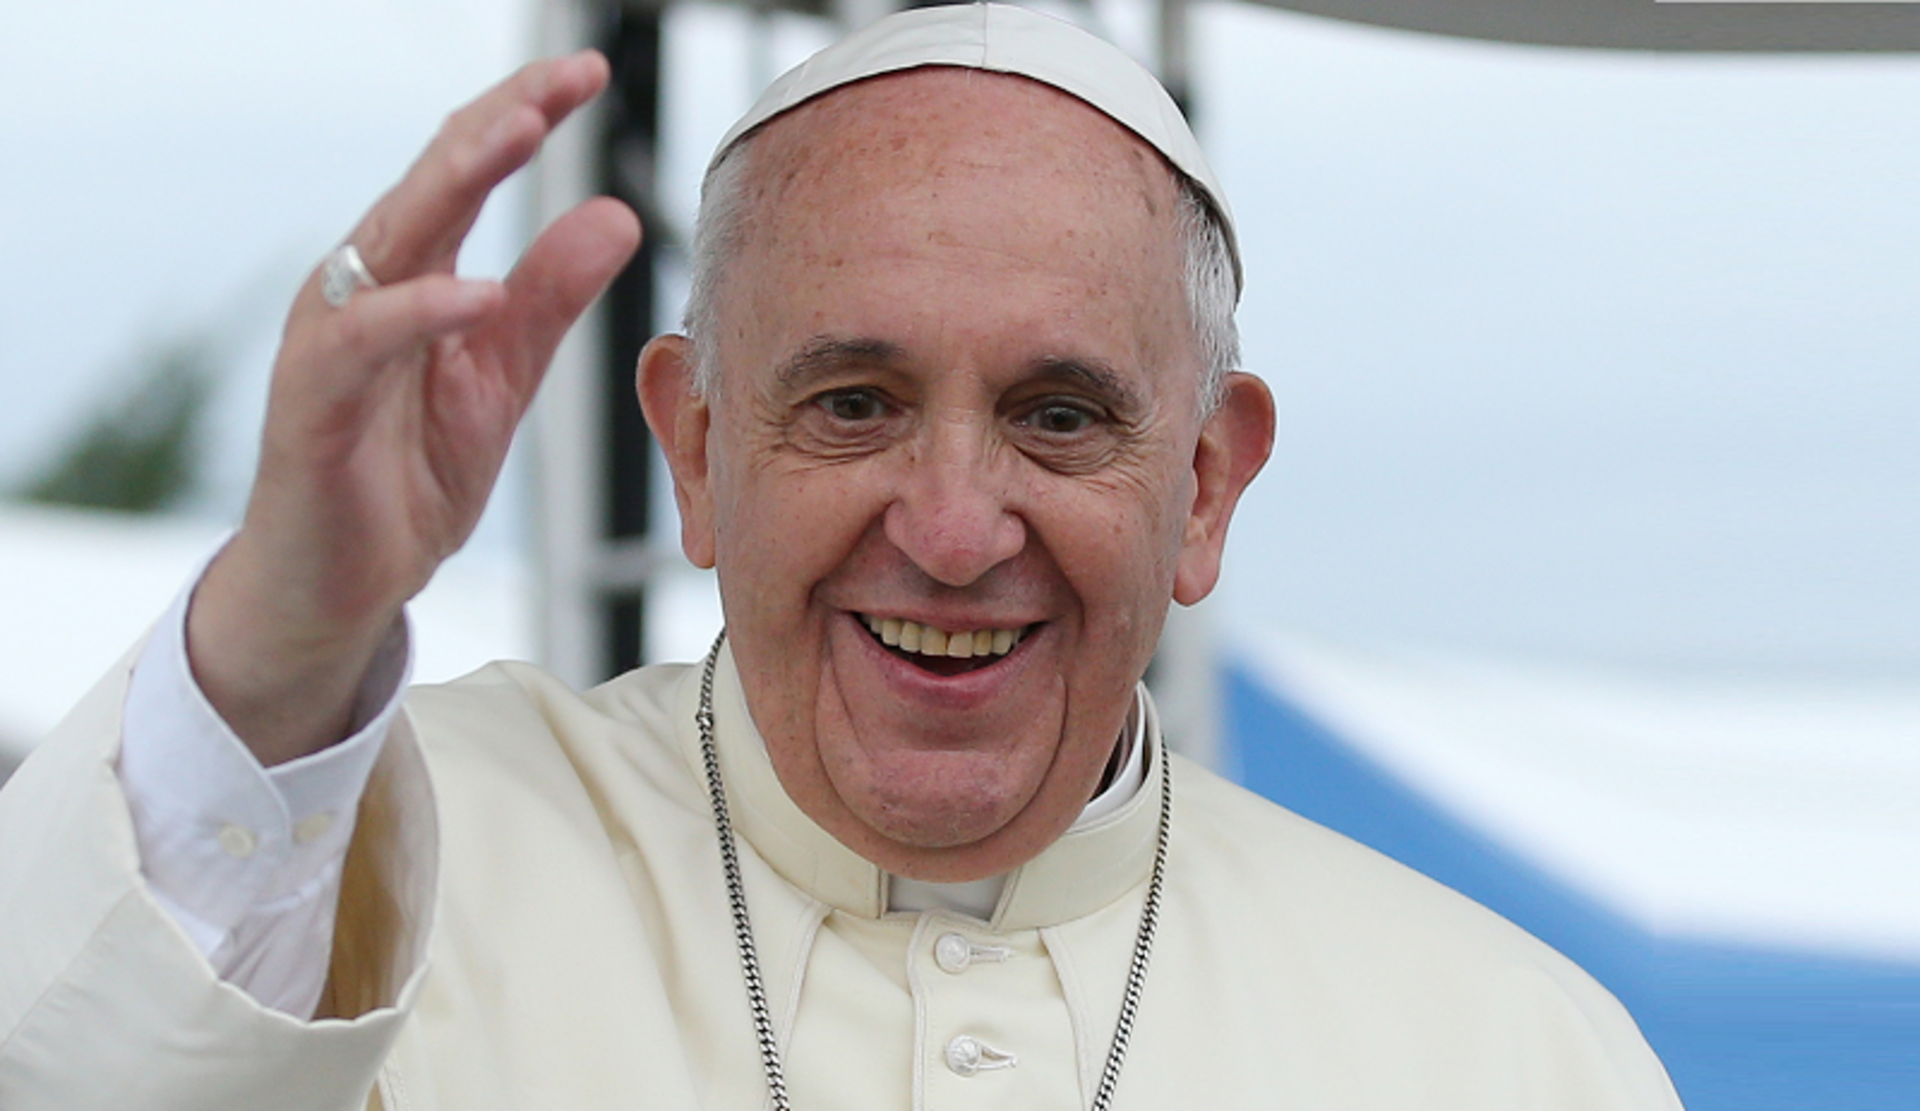 Папа Франциск. Папа Римский Франци́ск. Понтифик папа Римский Франциск. Франциск (папа Римский) фото.